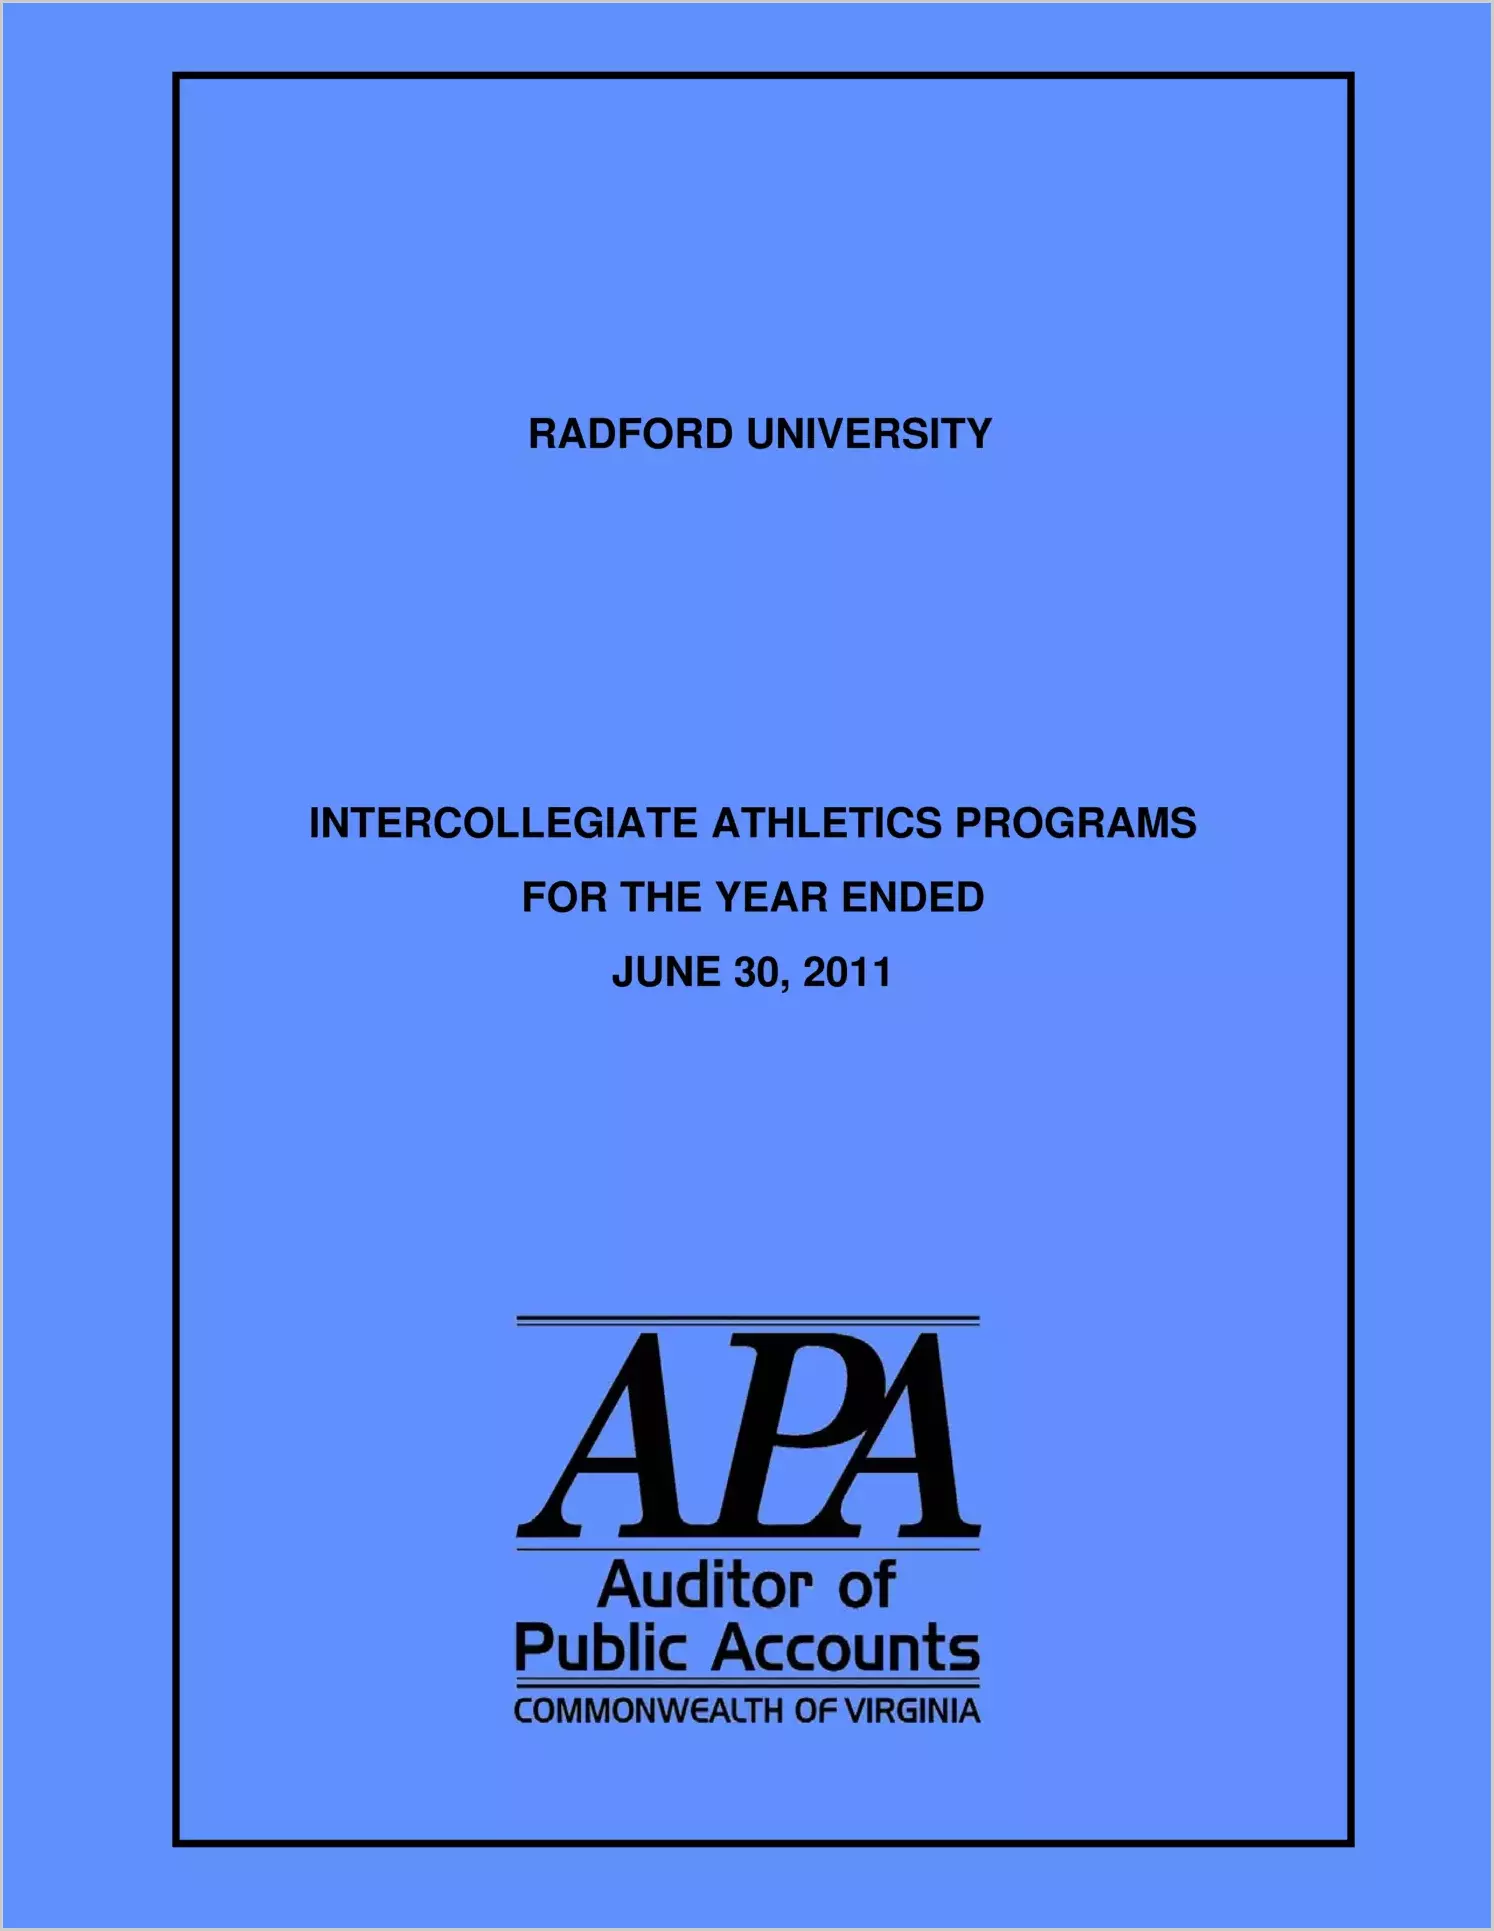 Radford University Intercollegiate Athletics Programs for the year ended June 30, 2011